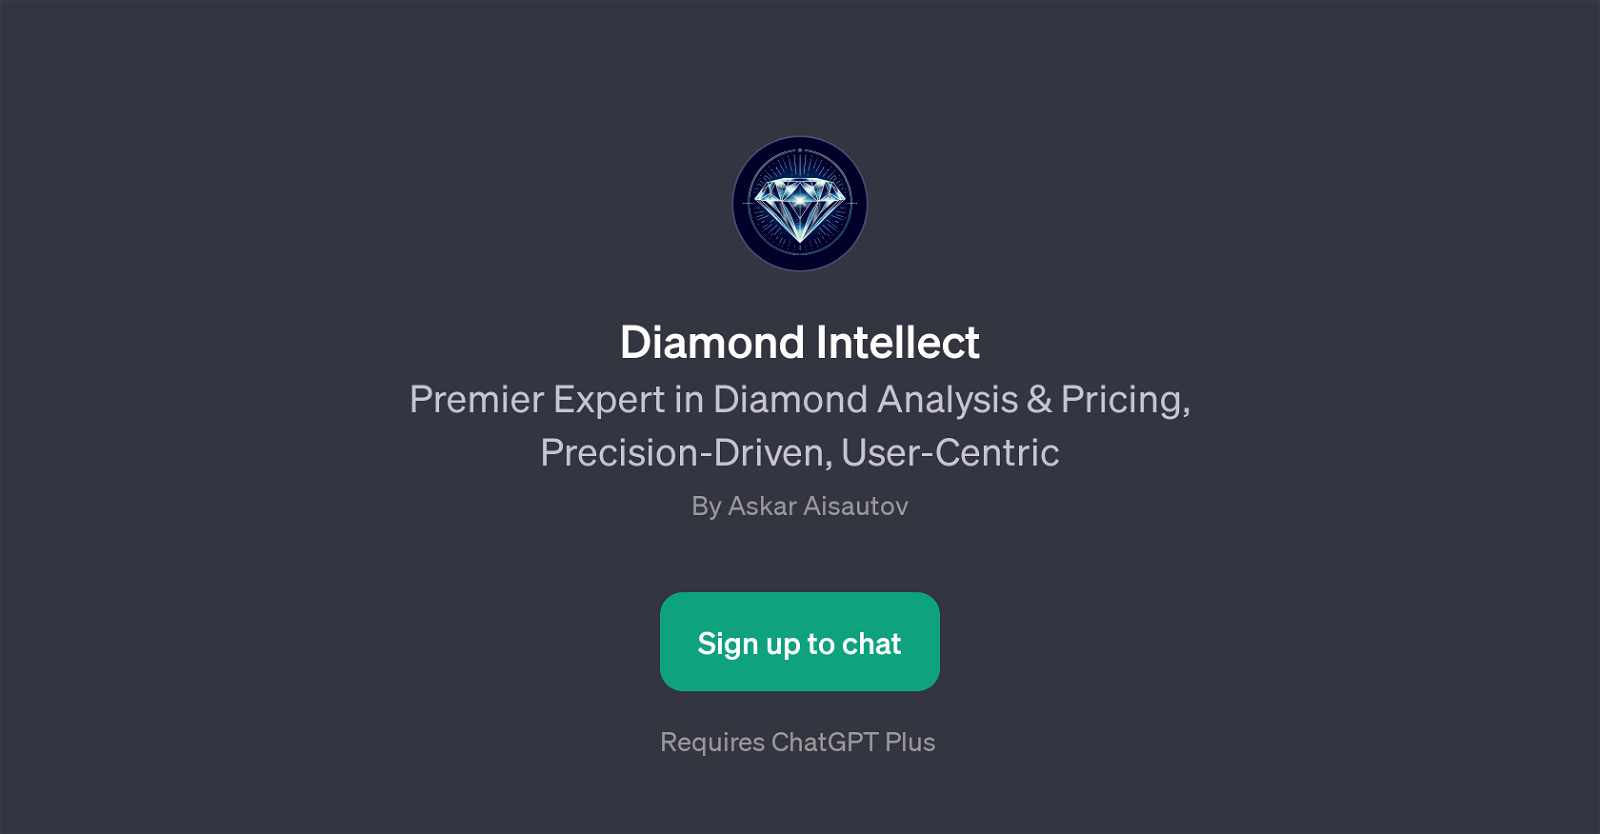 Diamond Intellect website